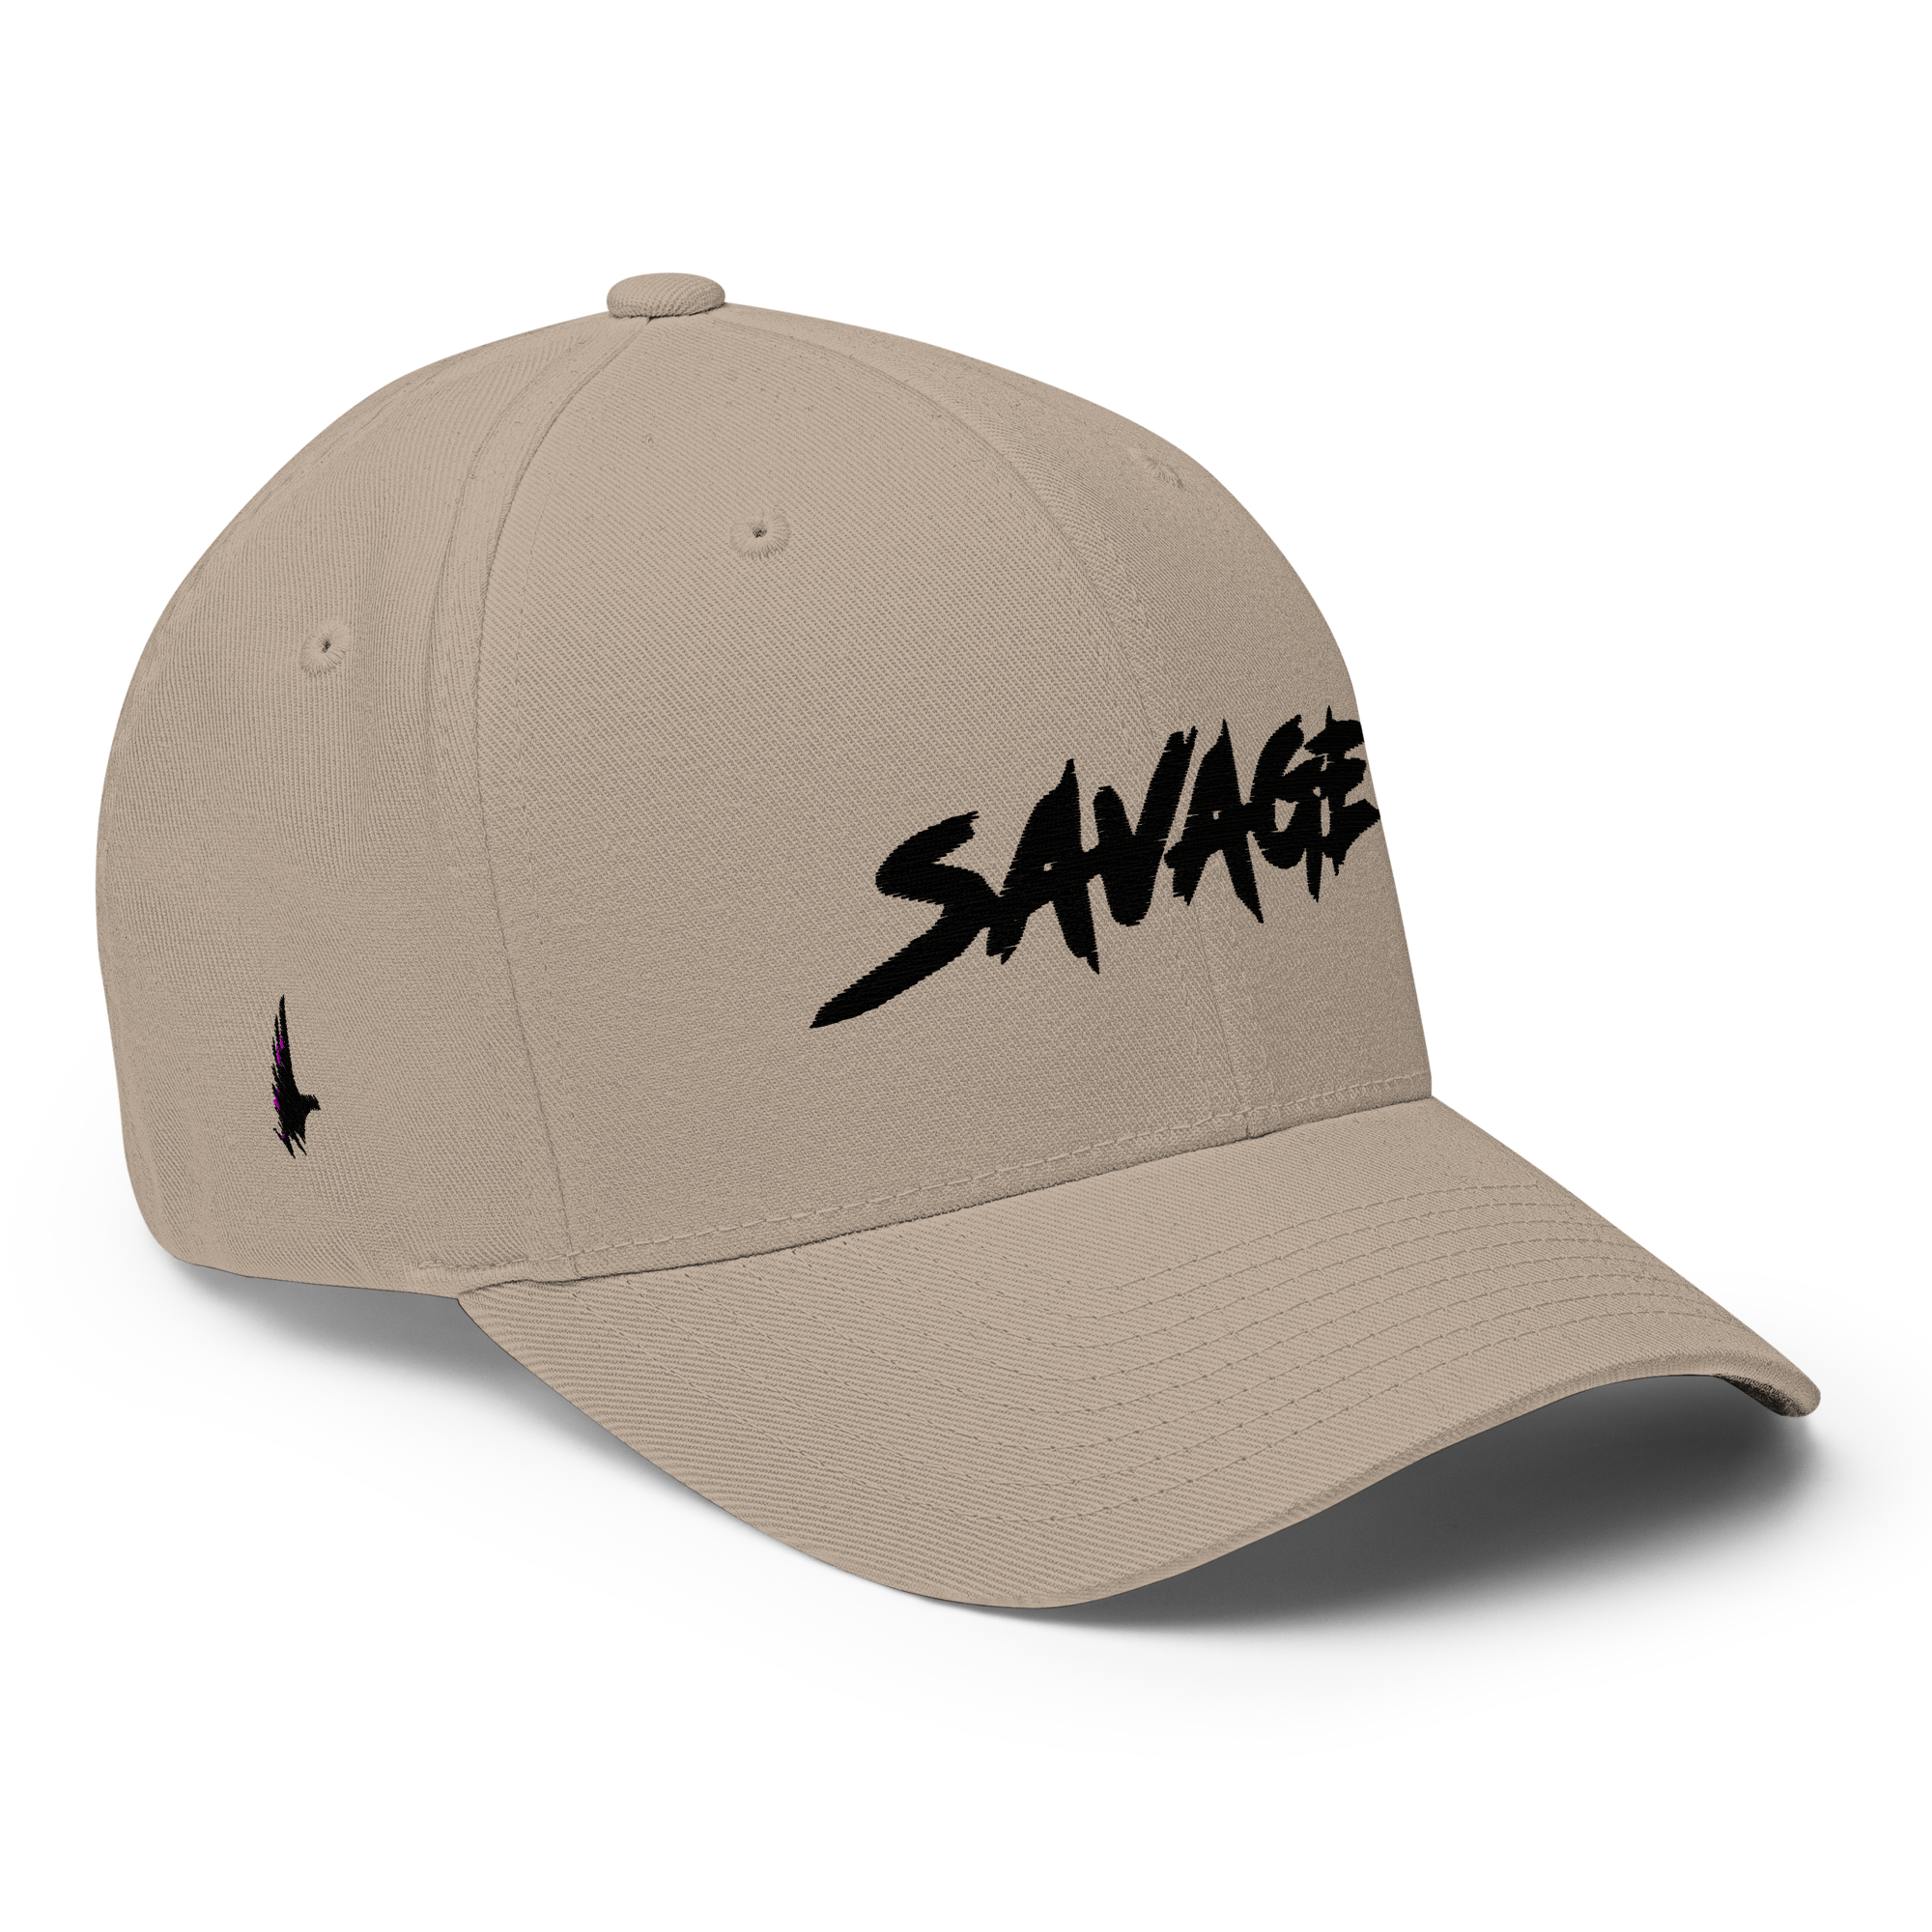 Savage Fitted Hat Sandstone Black - Loyalty Vibes